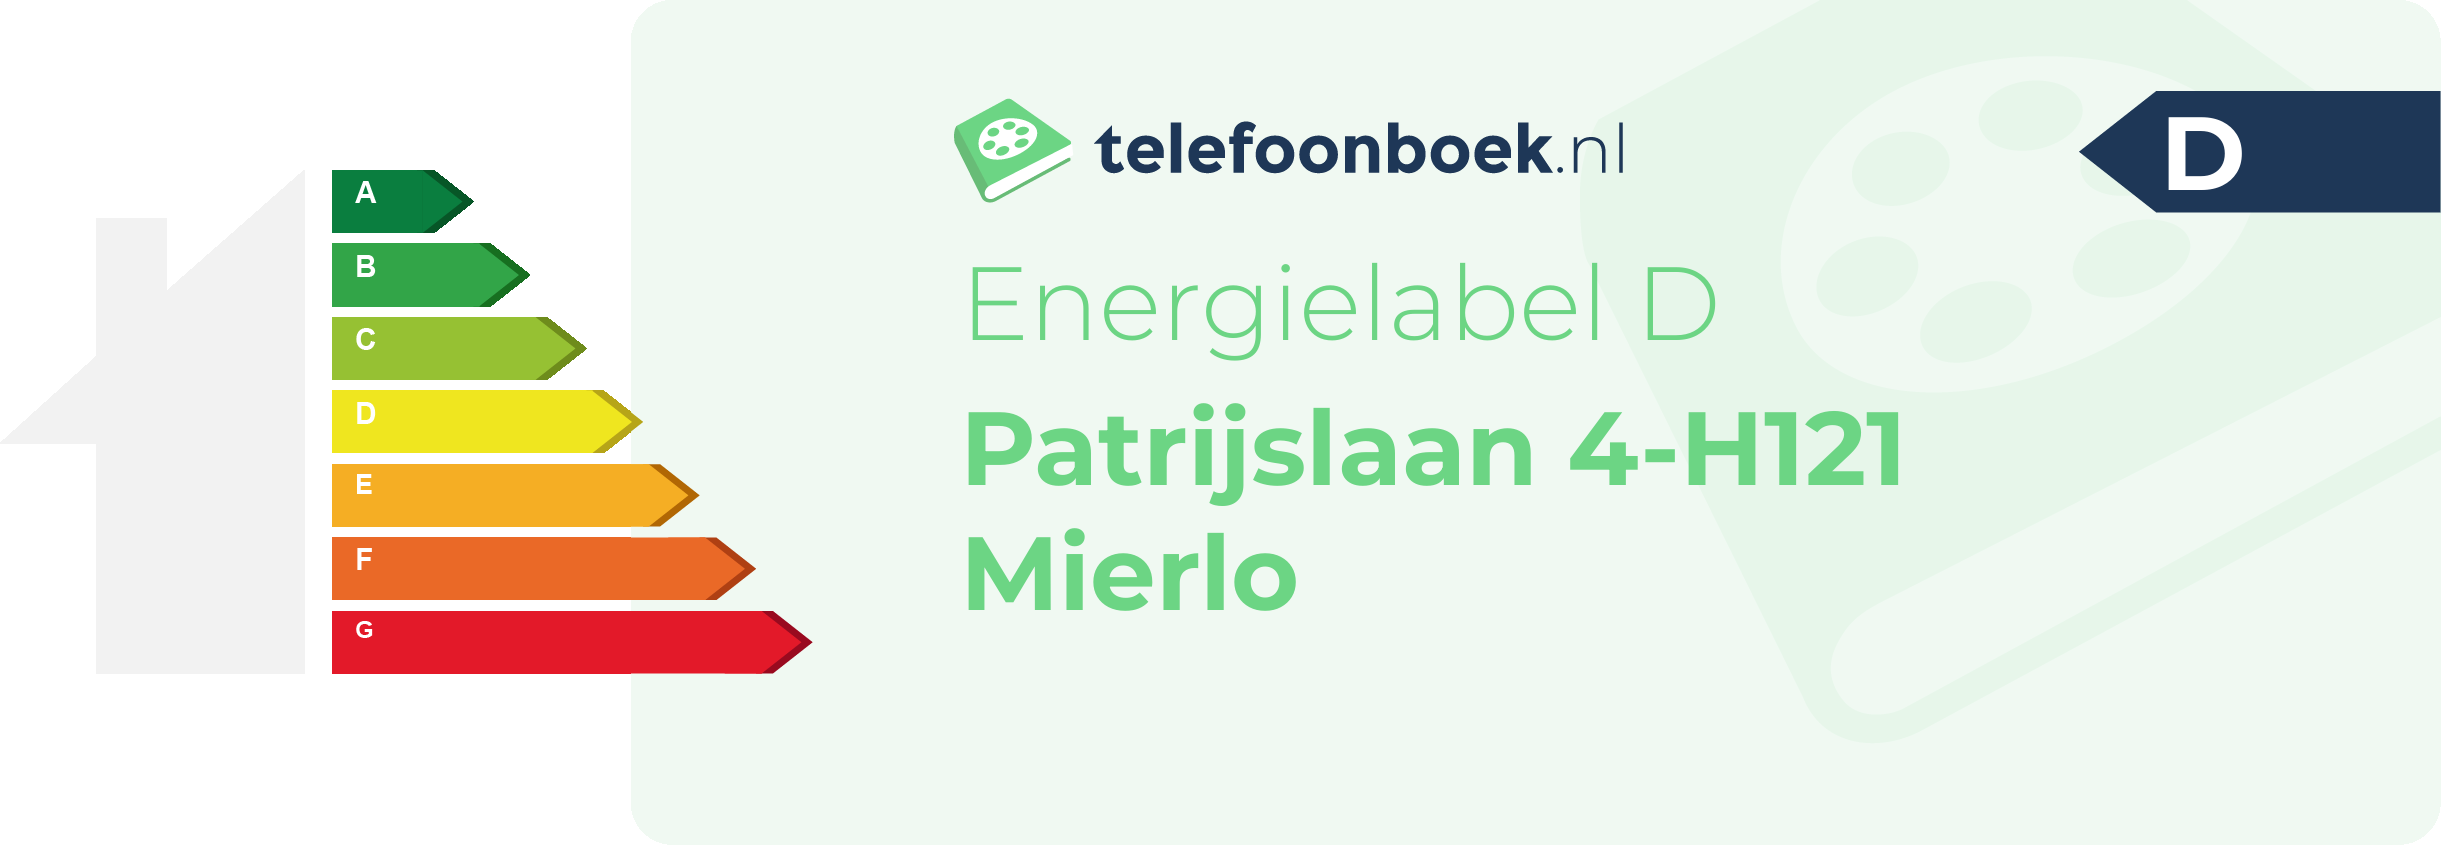 Energielabel Patrijslaan 4-H121 Mierlo